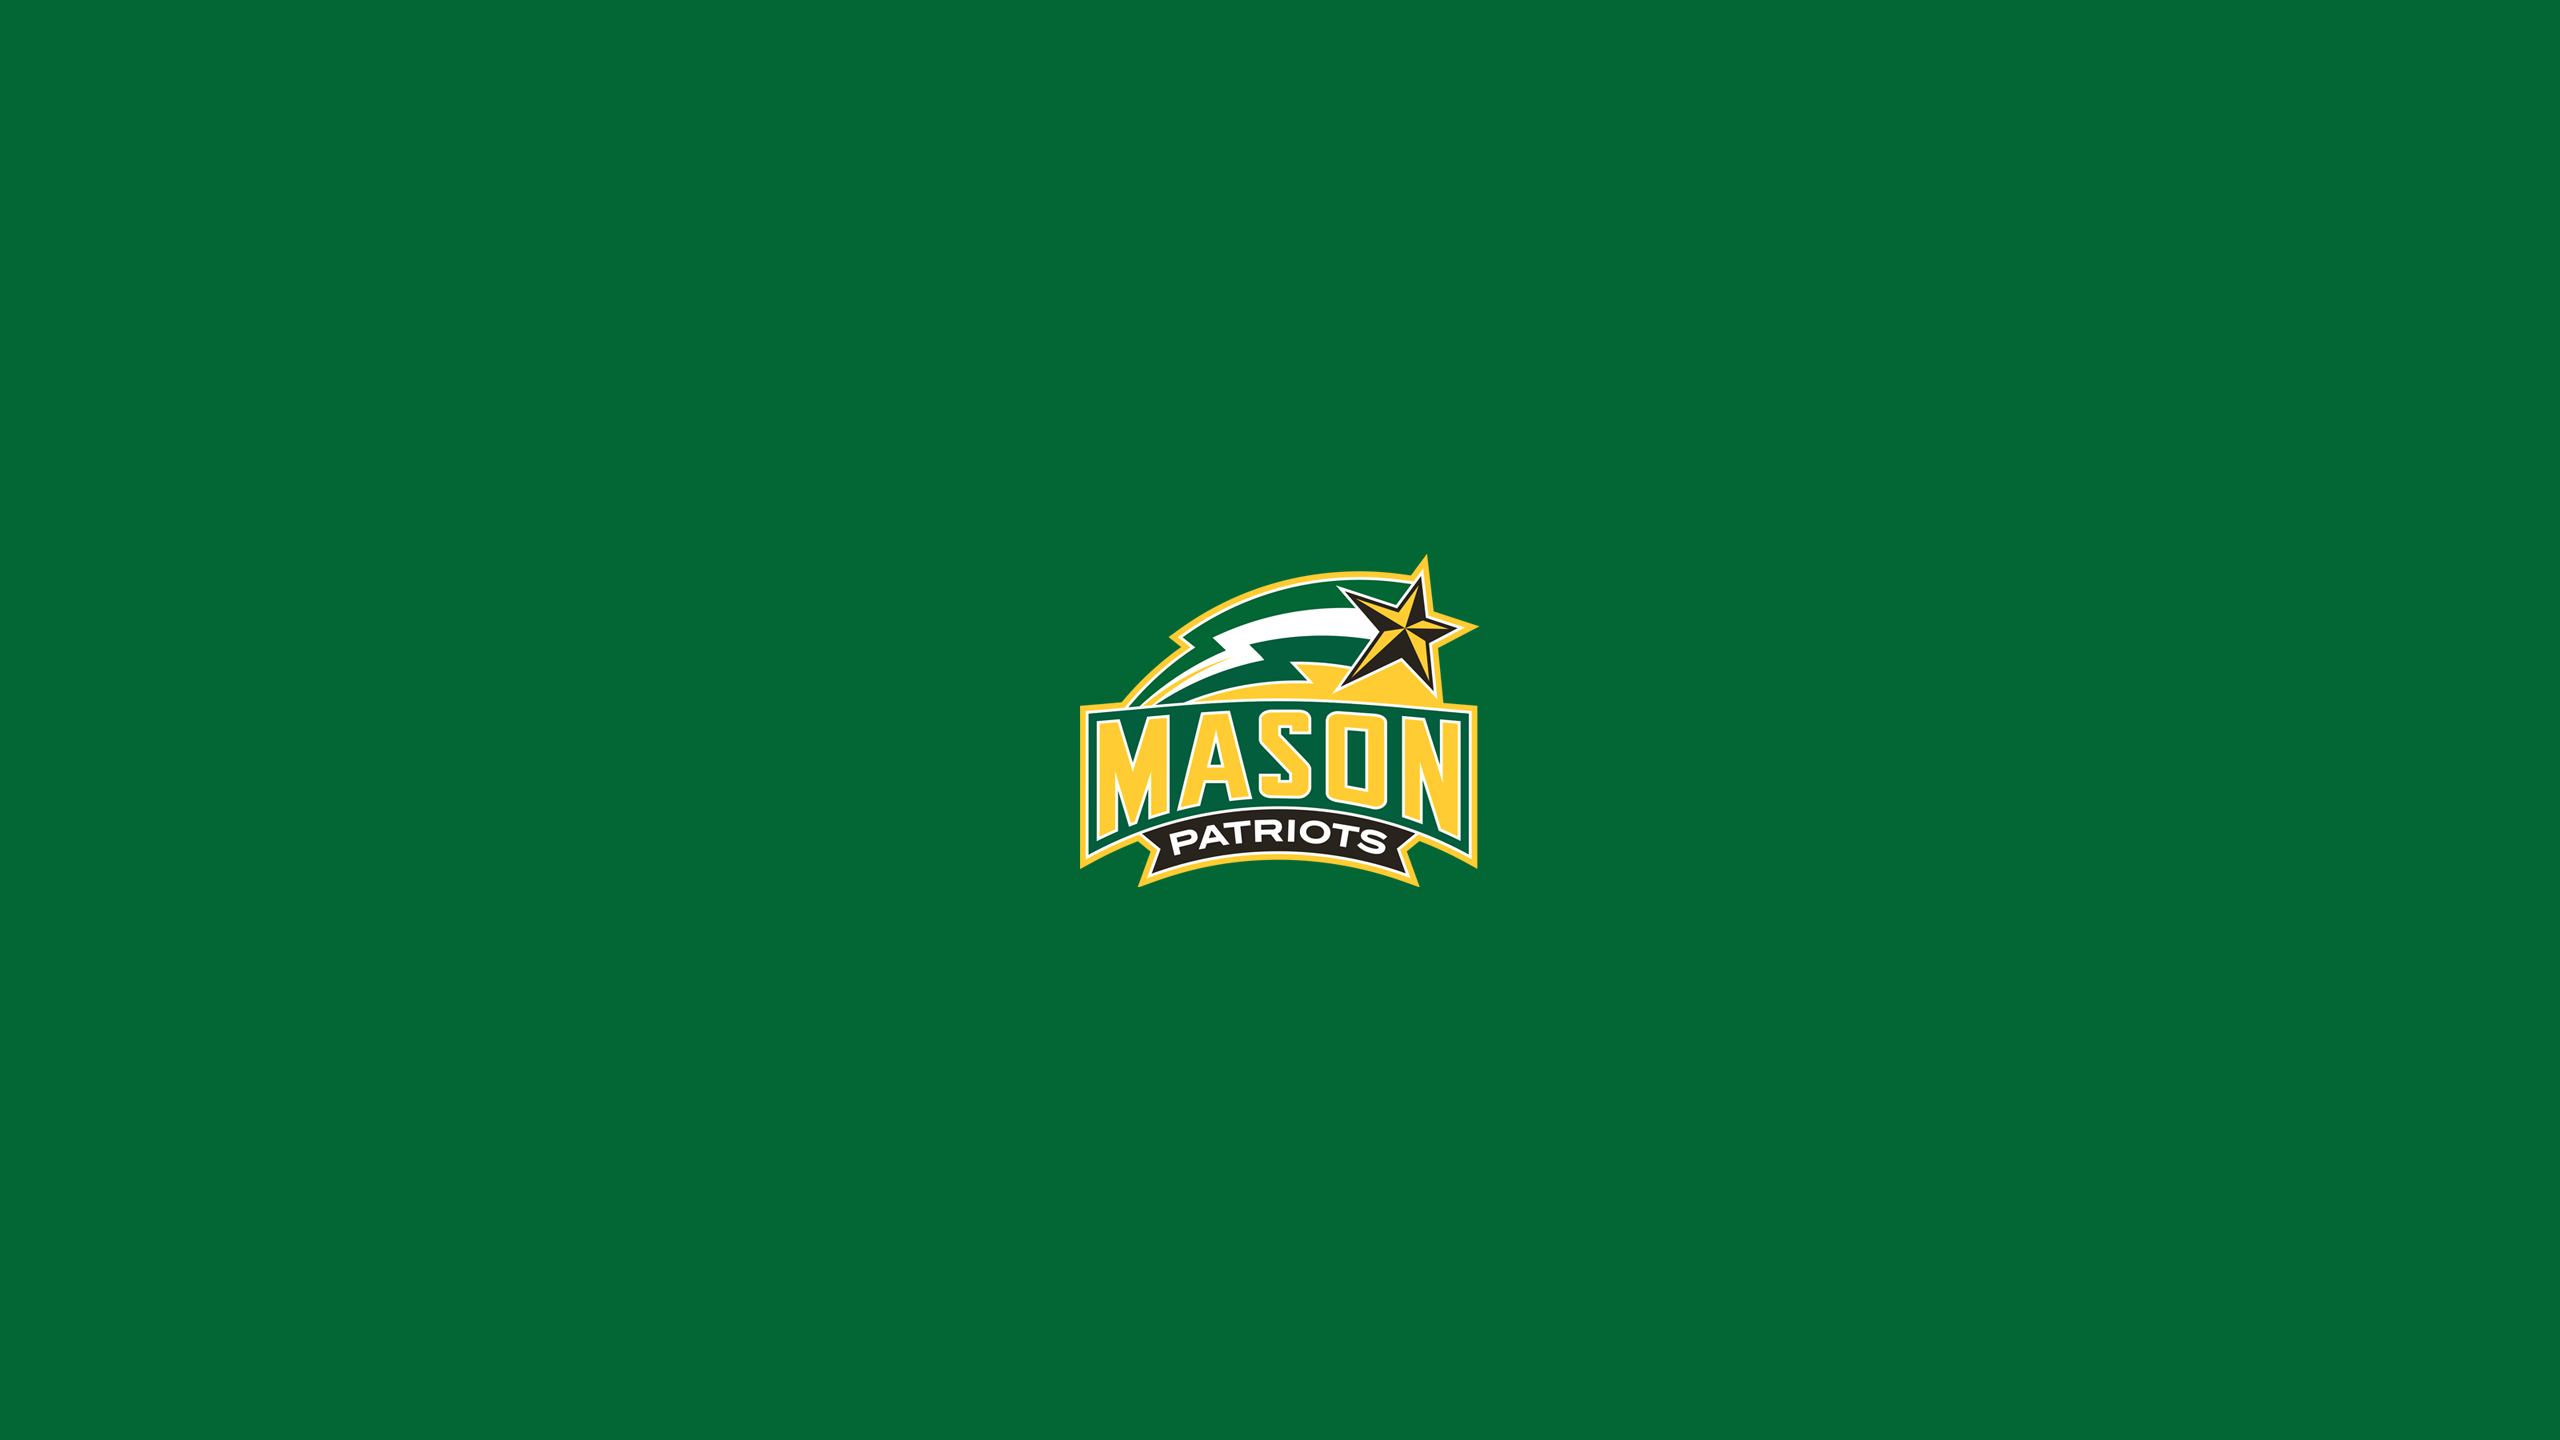 George Mason Patriots Basketball - NCAAB - Square Bettor